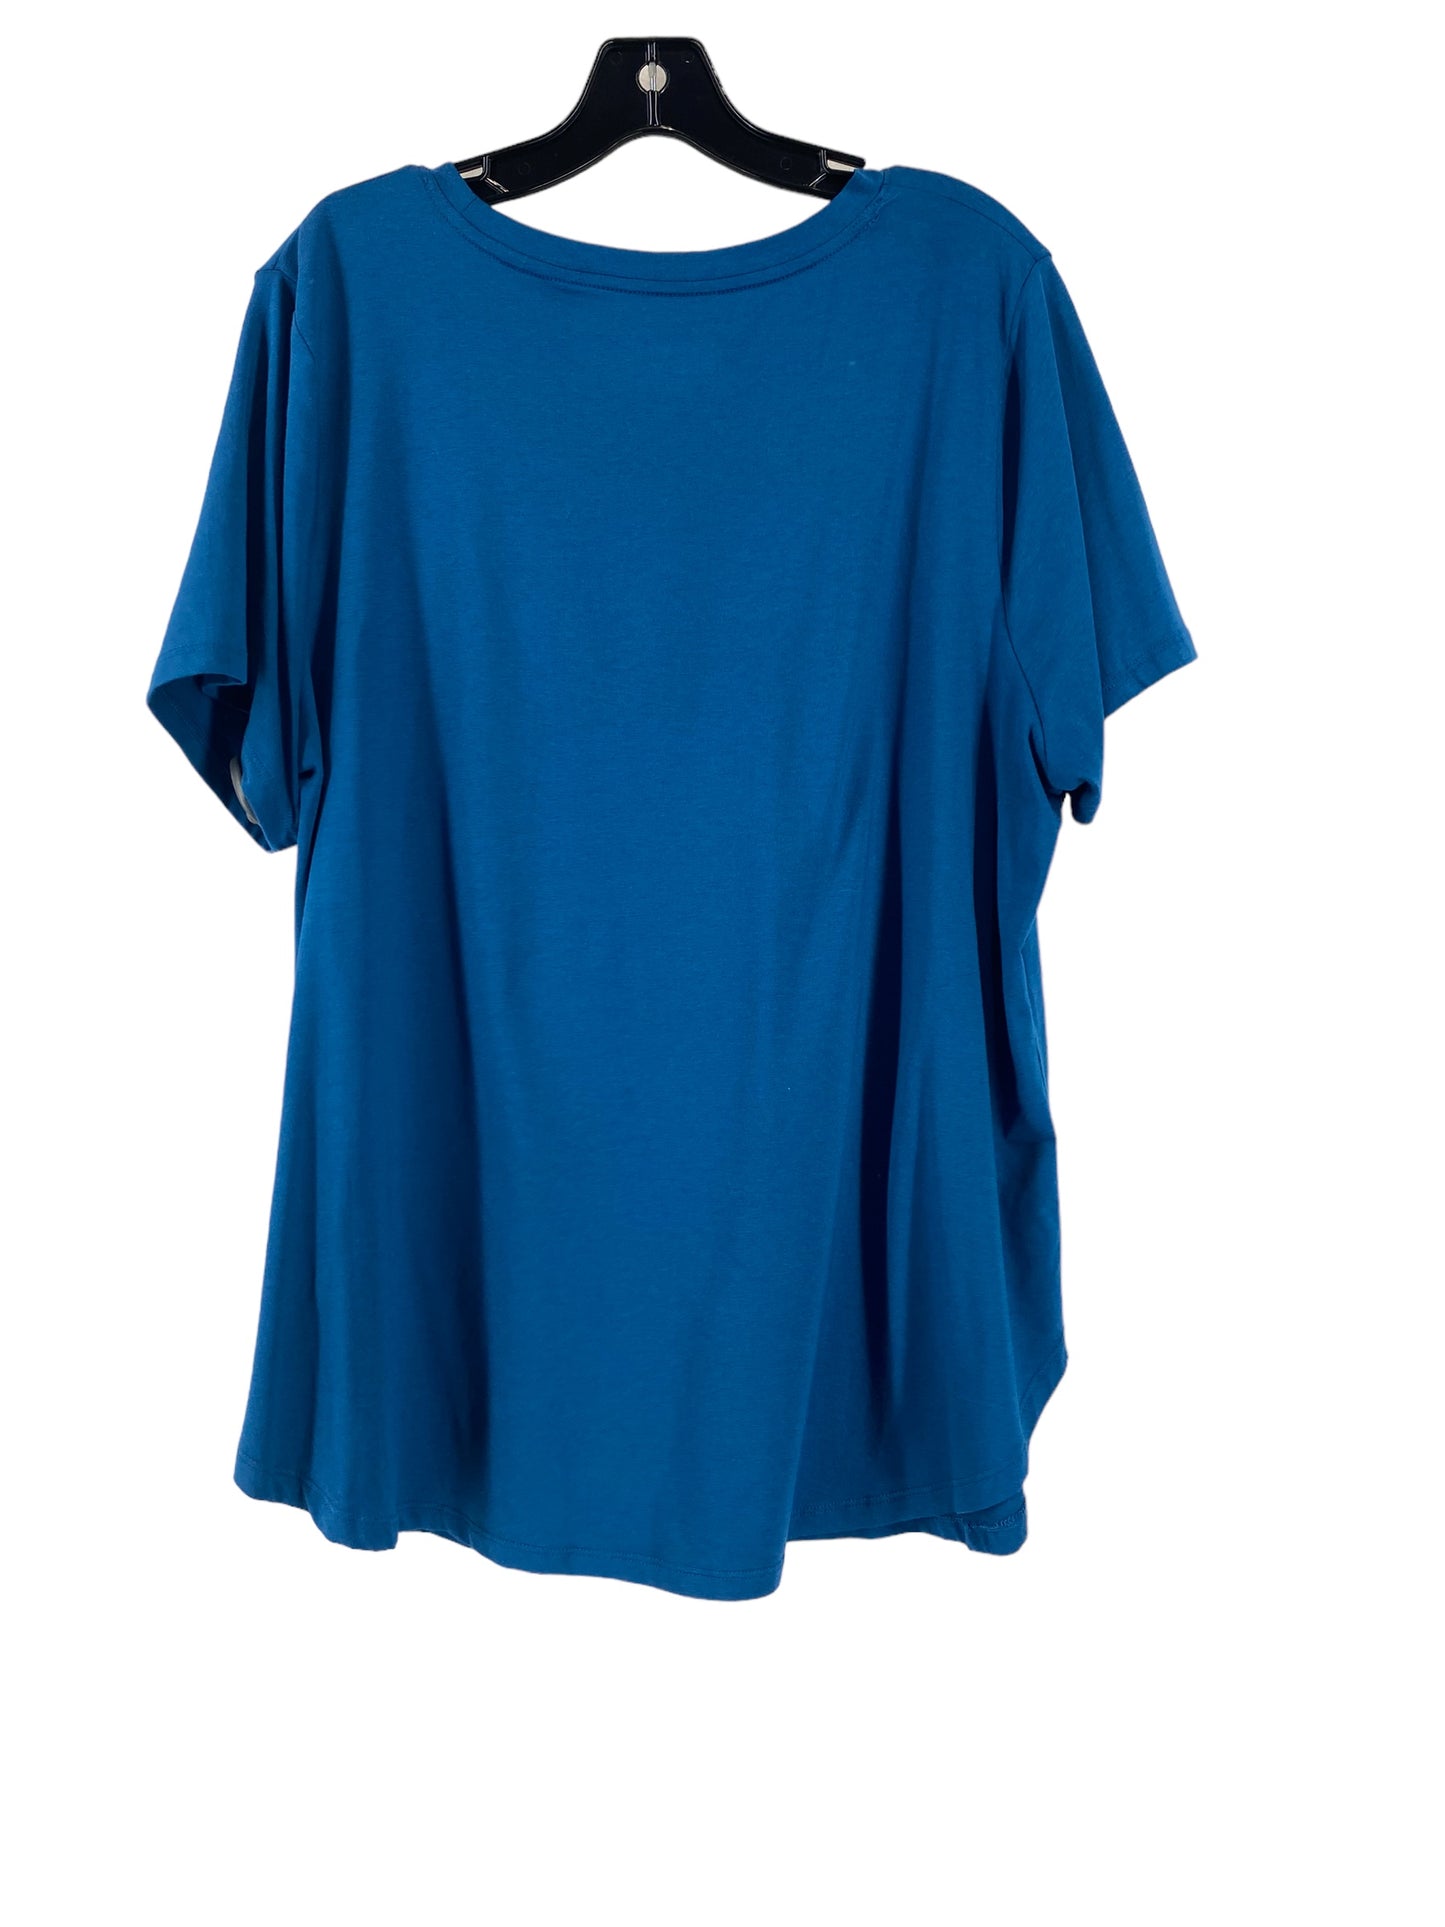 Top Short Sleeve Basic By Ava & Viv  Size: 1x